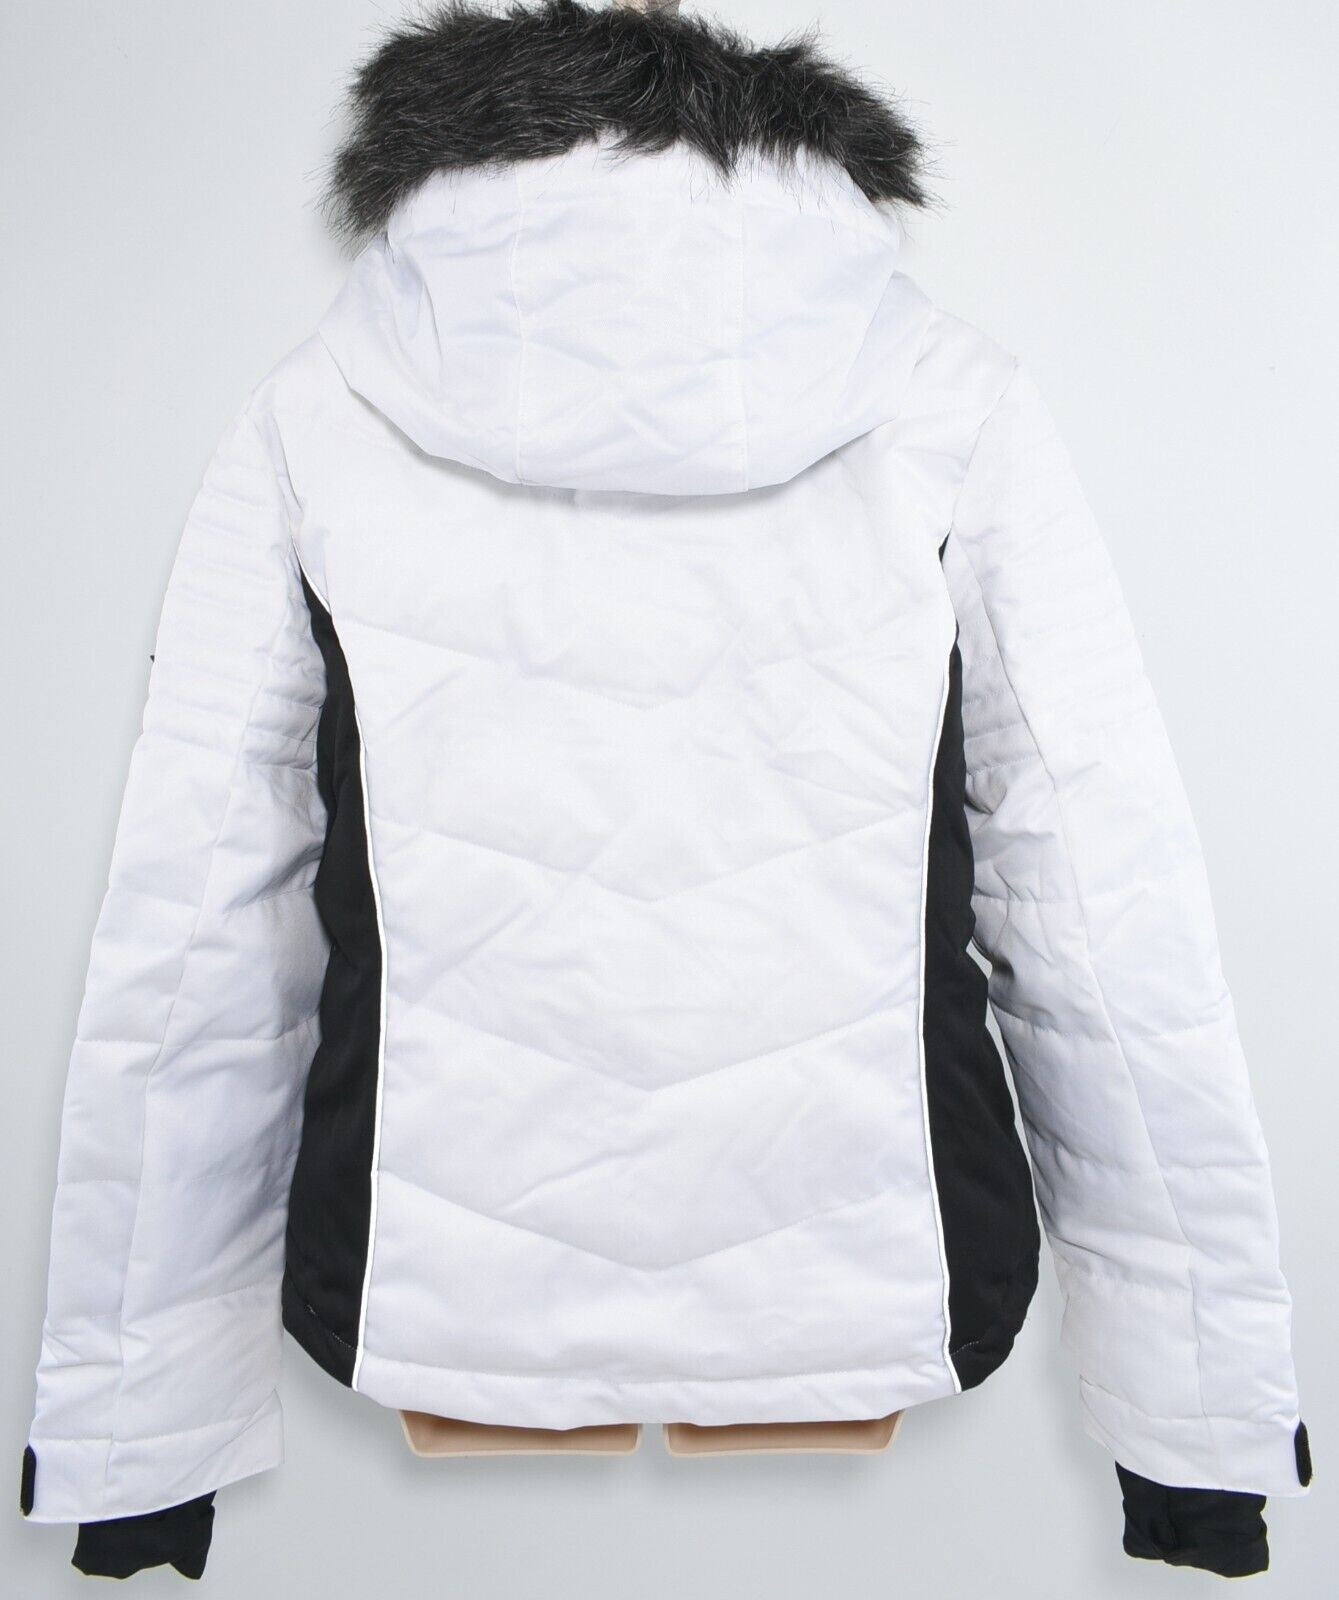 SUPERDRY Womens Ski Jacket, Snow Puffer, White & Black, size L / UK 14